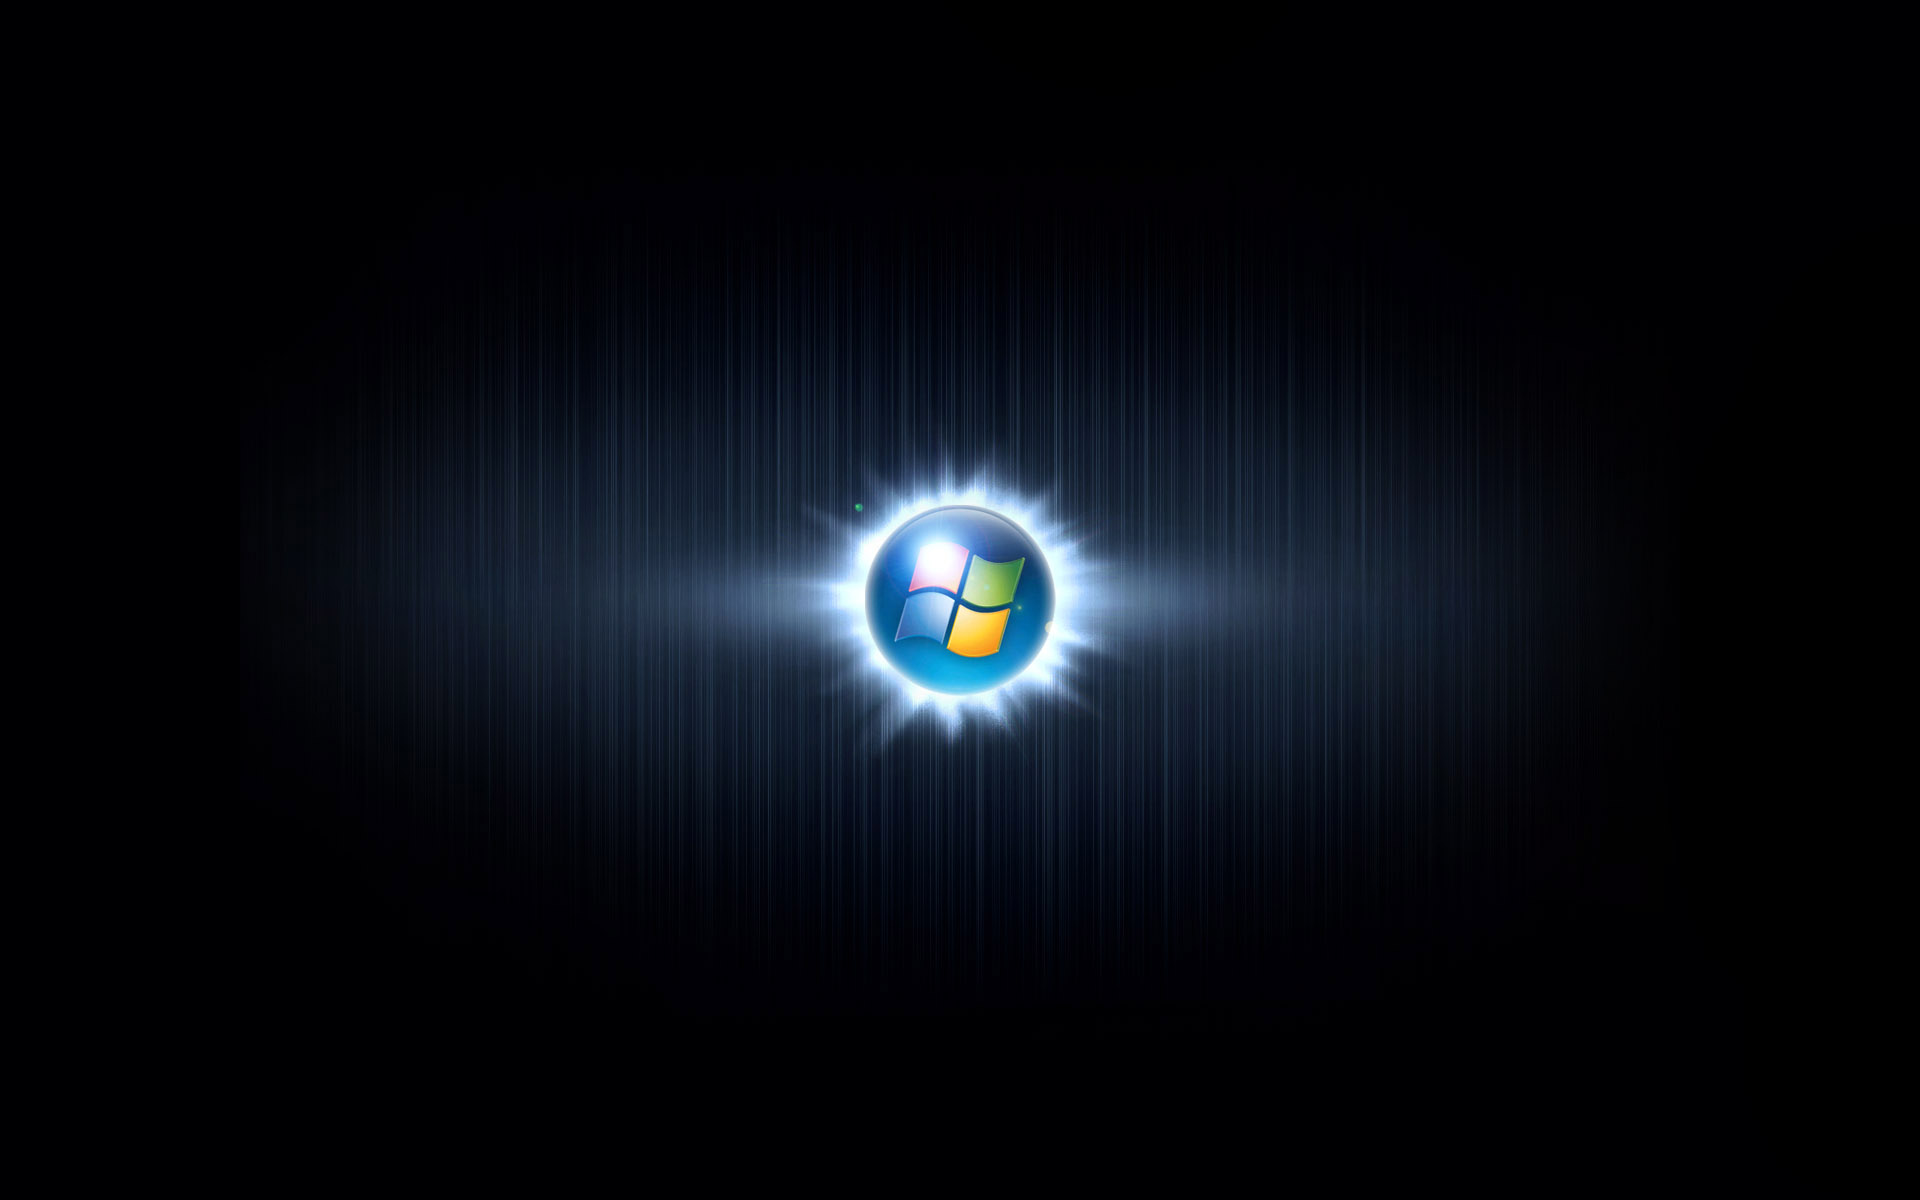 Vista Wallpaper Windows Linux Photography Desktop